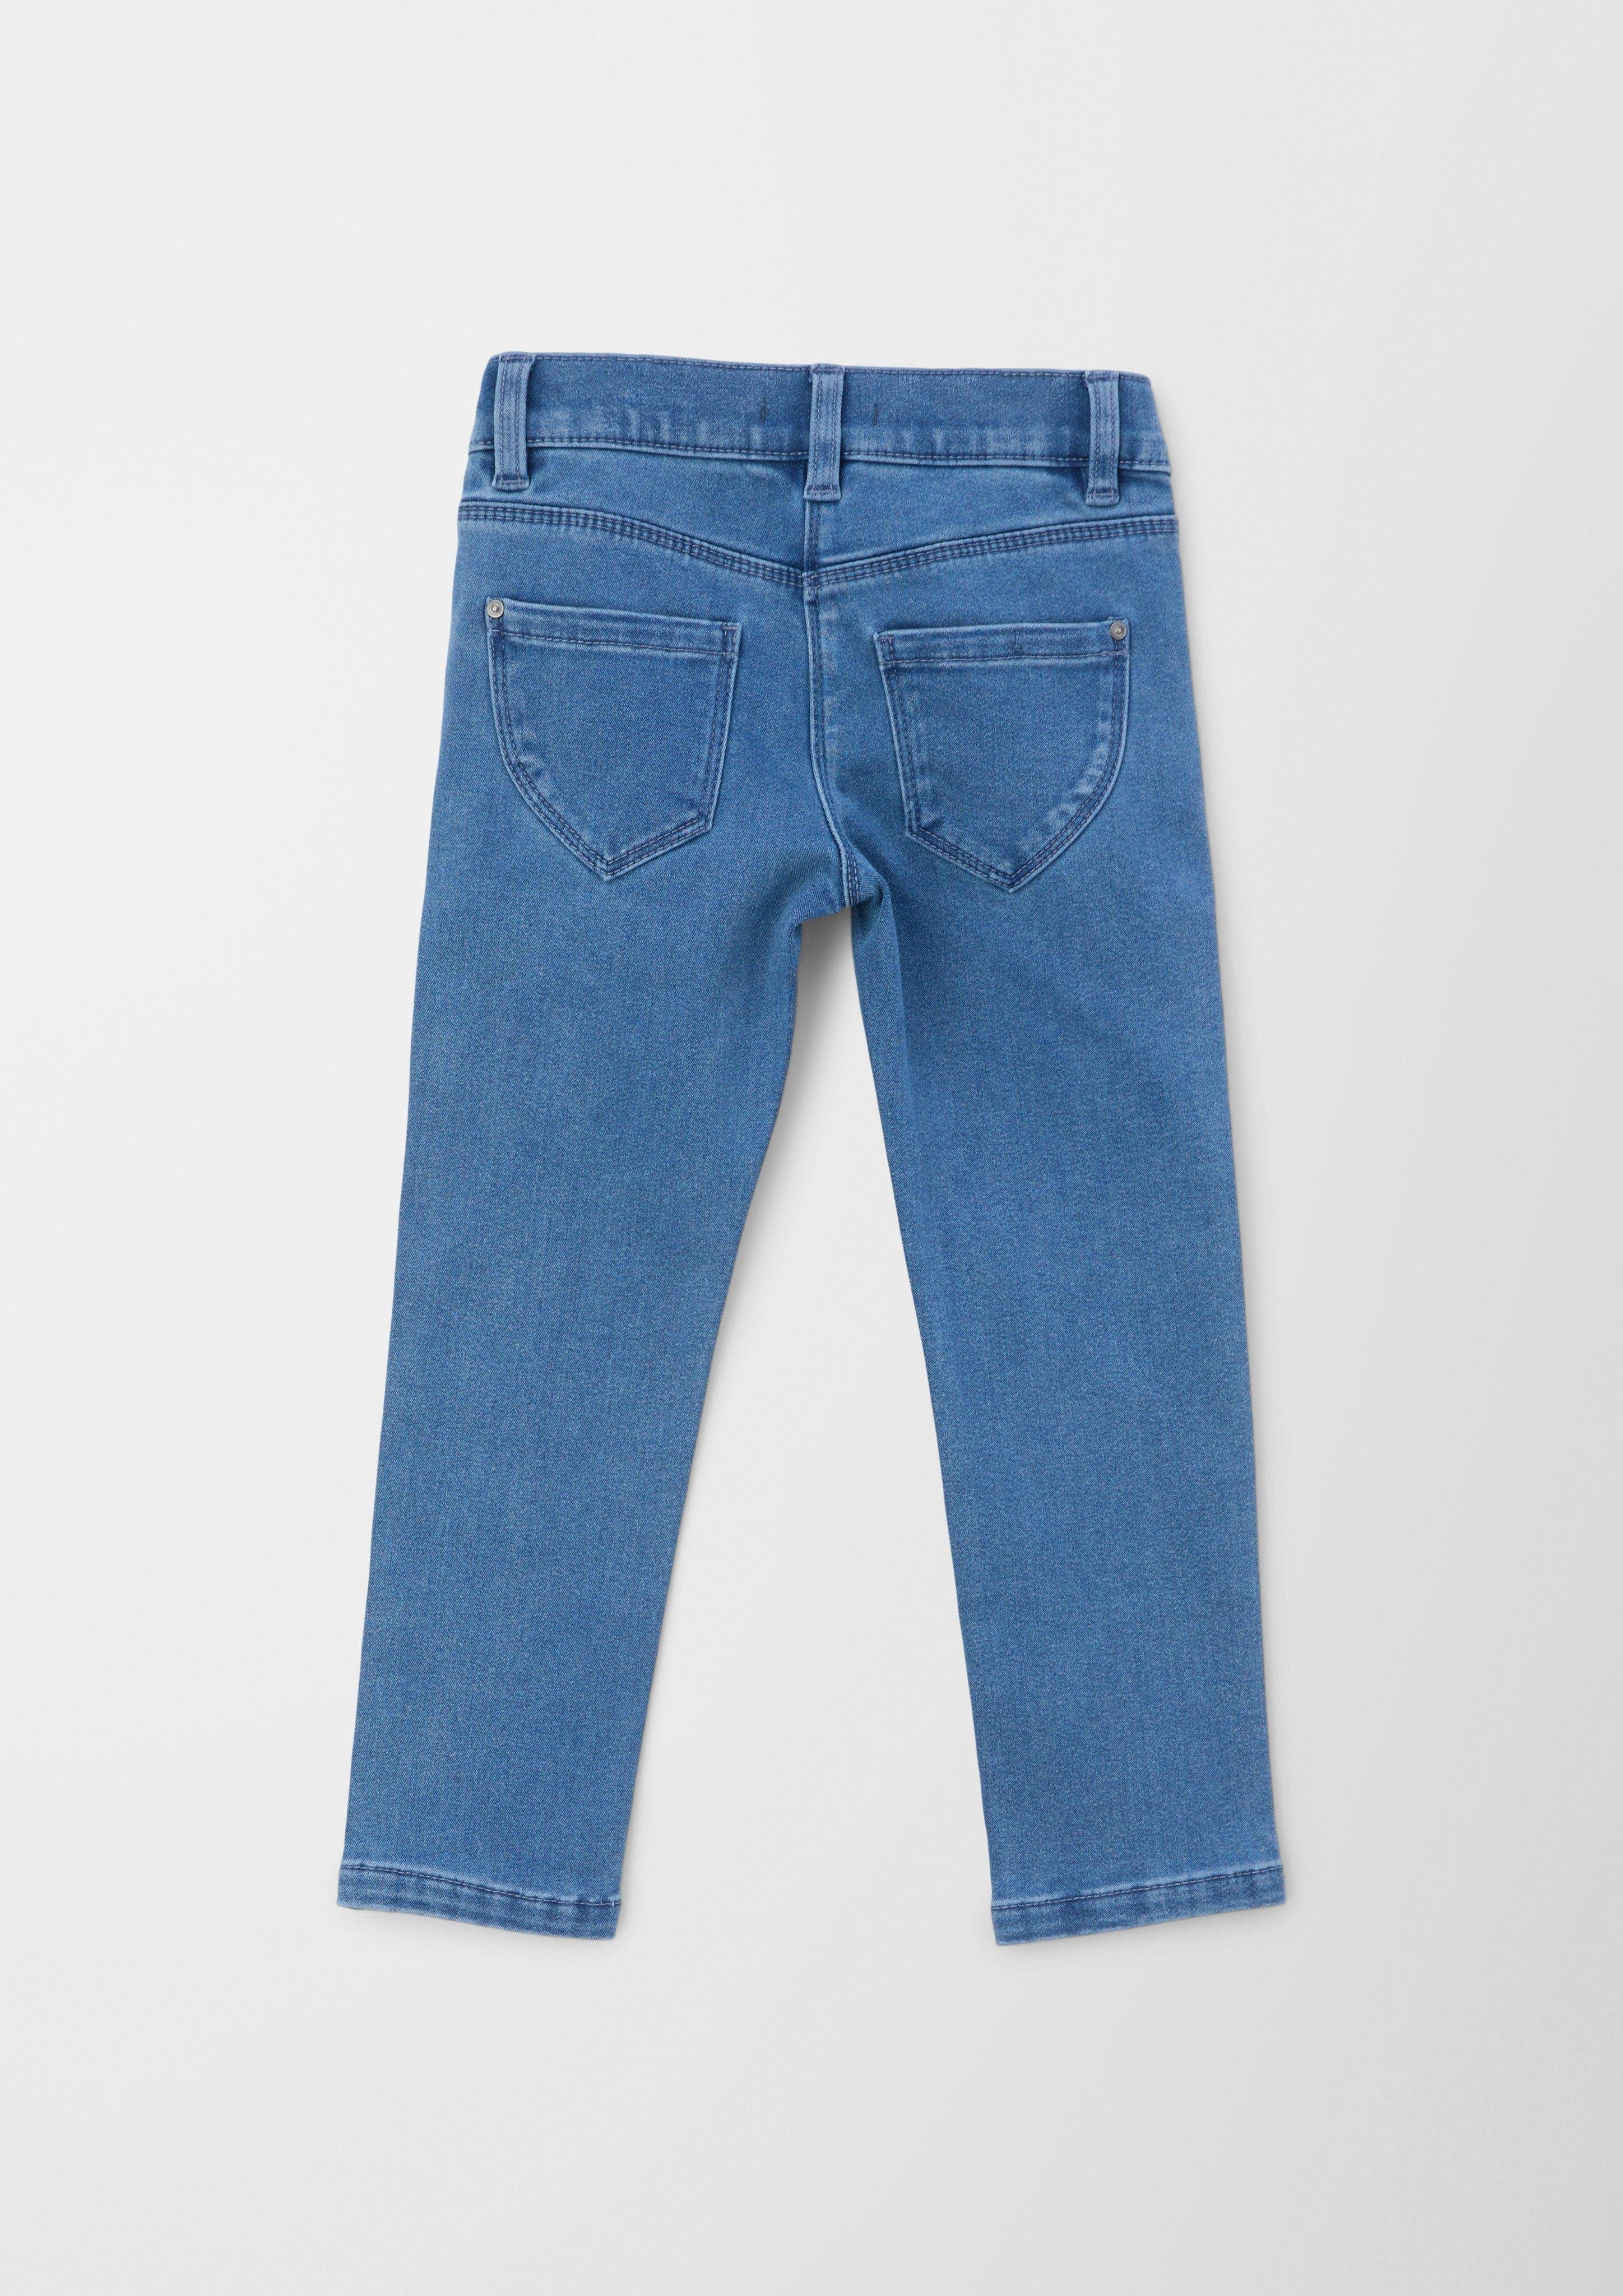 s.Oliver Stoffhose Jeans Waschung Fit Mid Galonstreifen, Kathy Regular Rise / / / Slim Leg